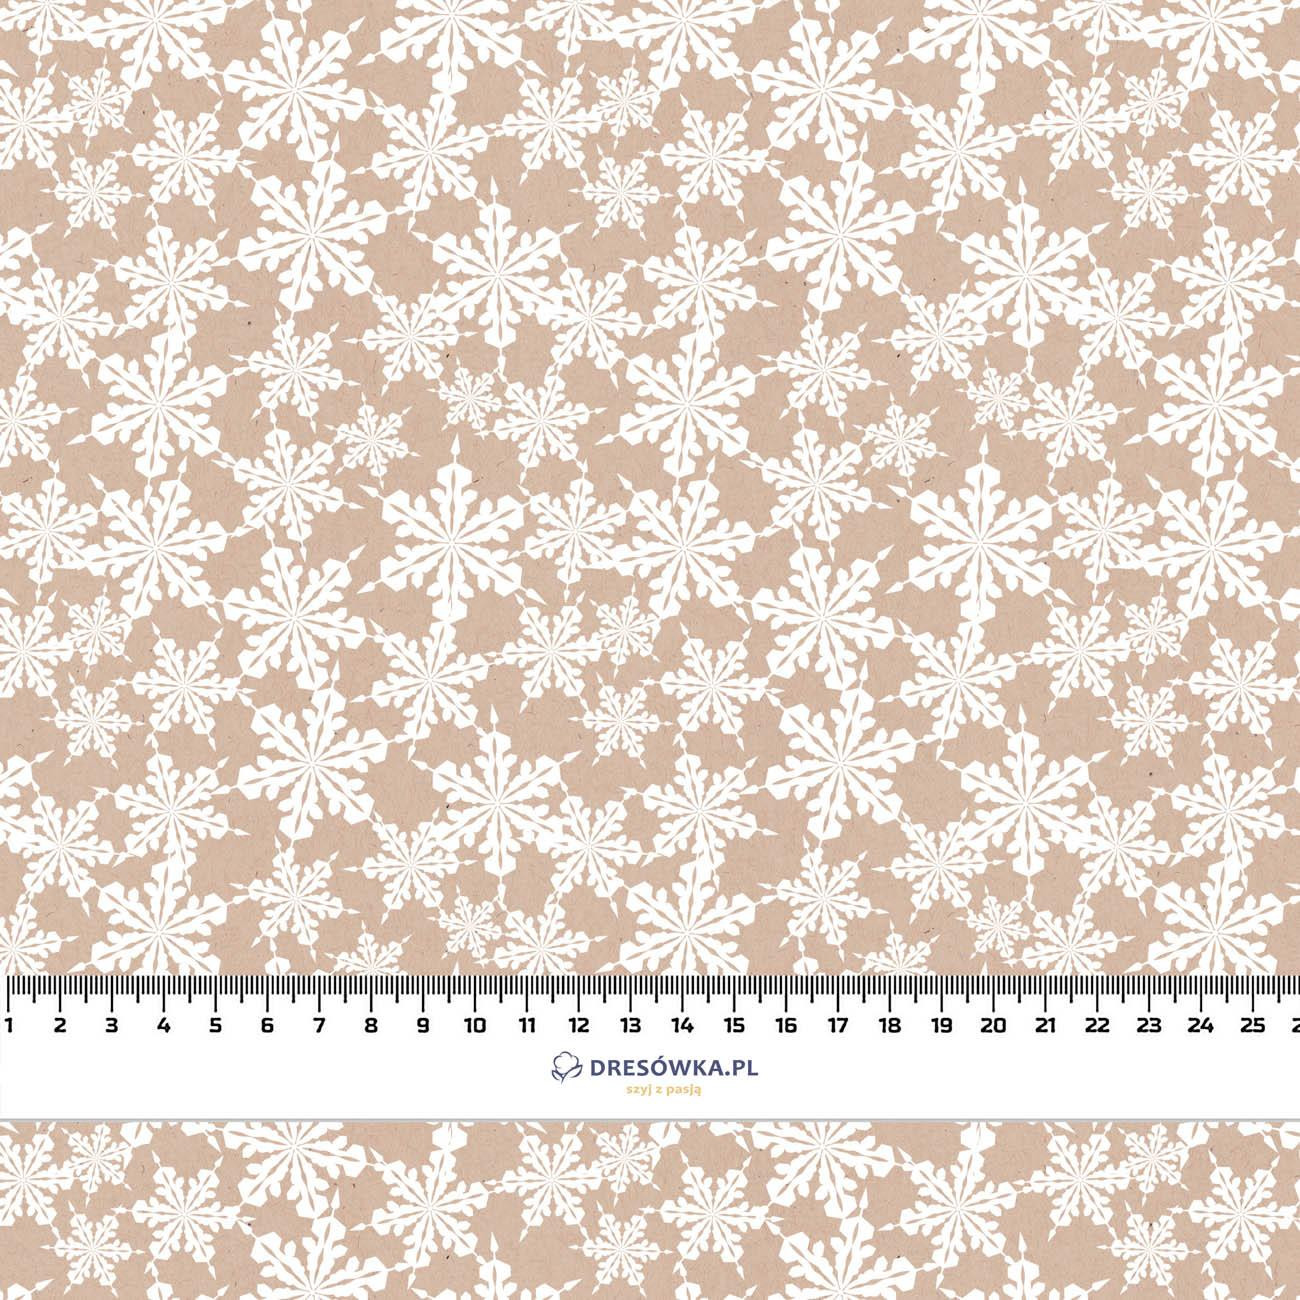 PAPER SNOWFLAKES (WHITE CHRISTMAS) - Cotton woven fabric